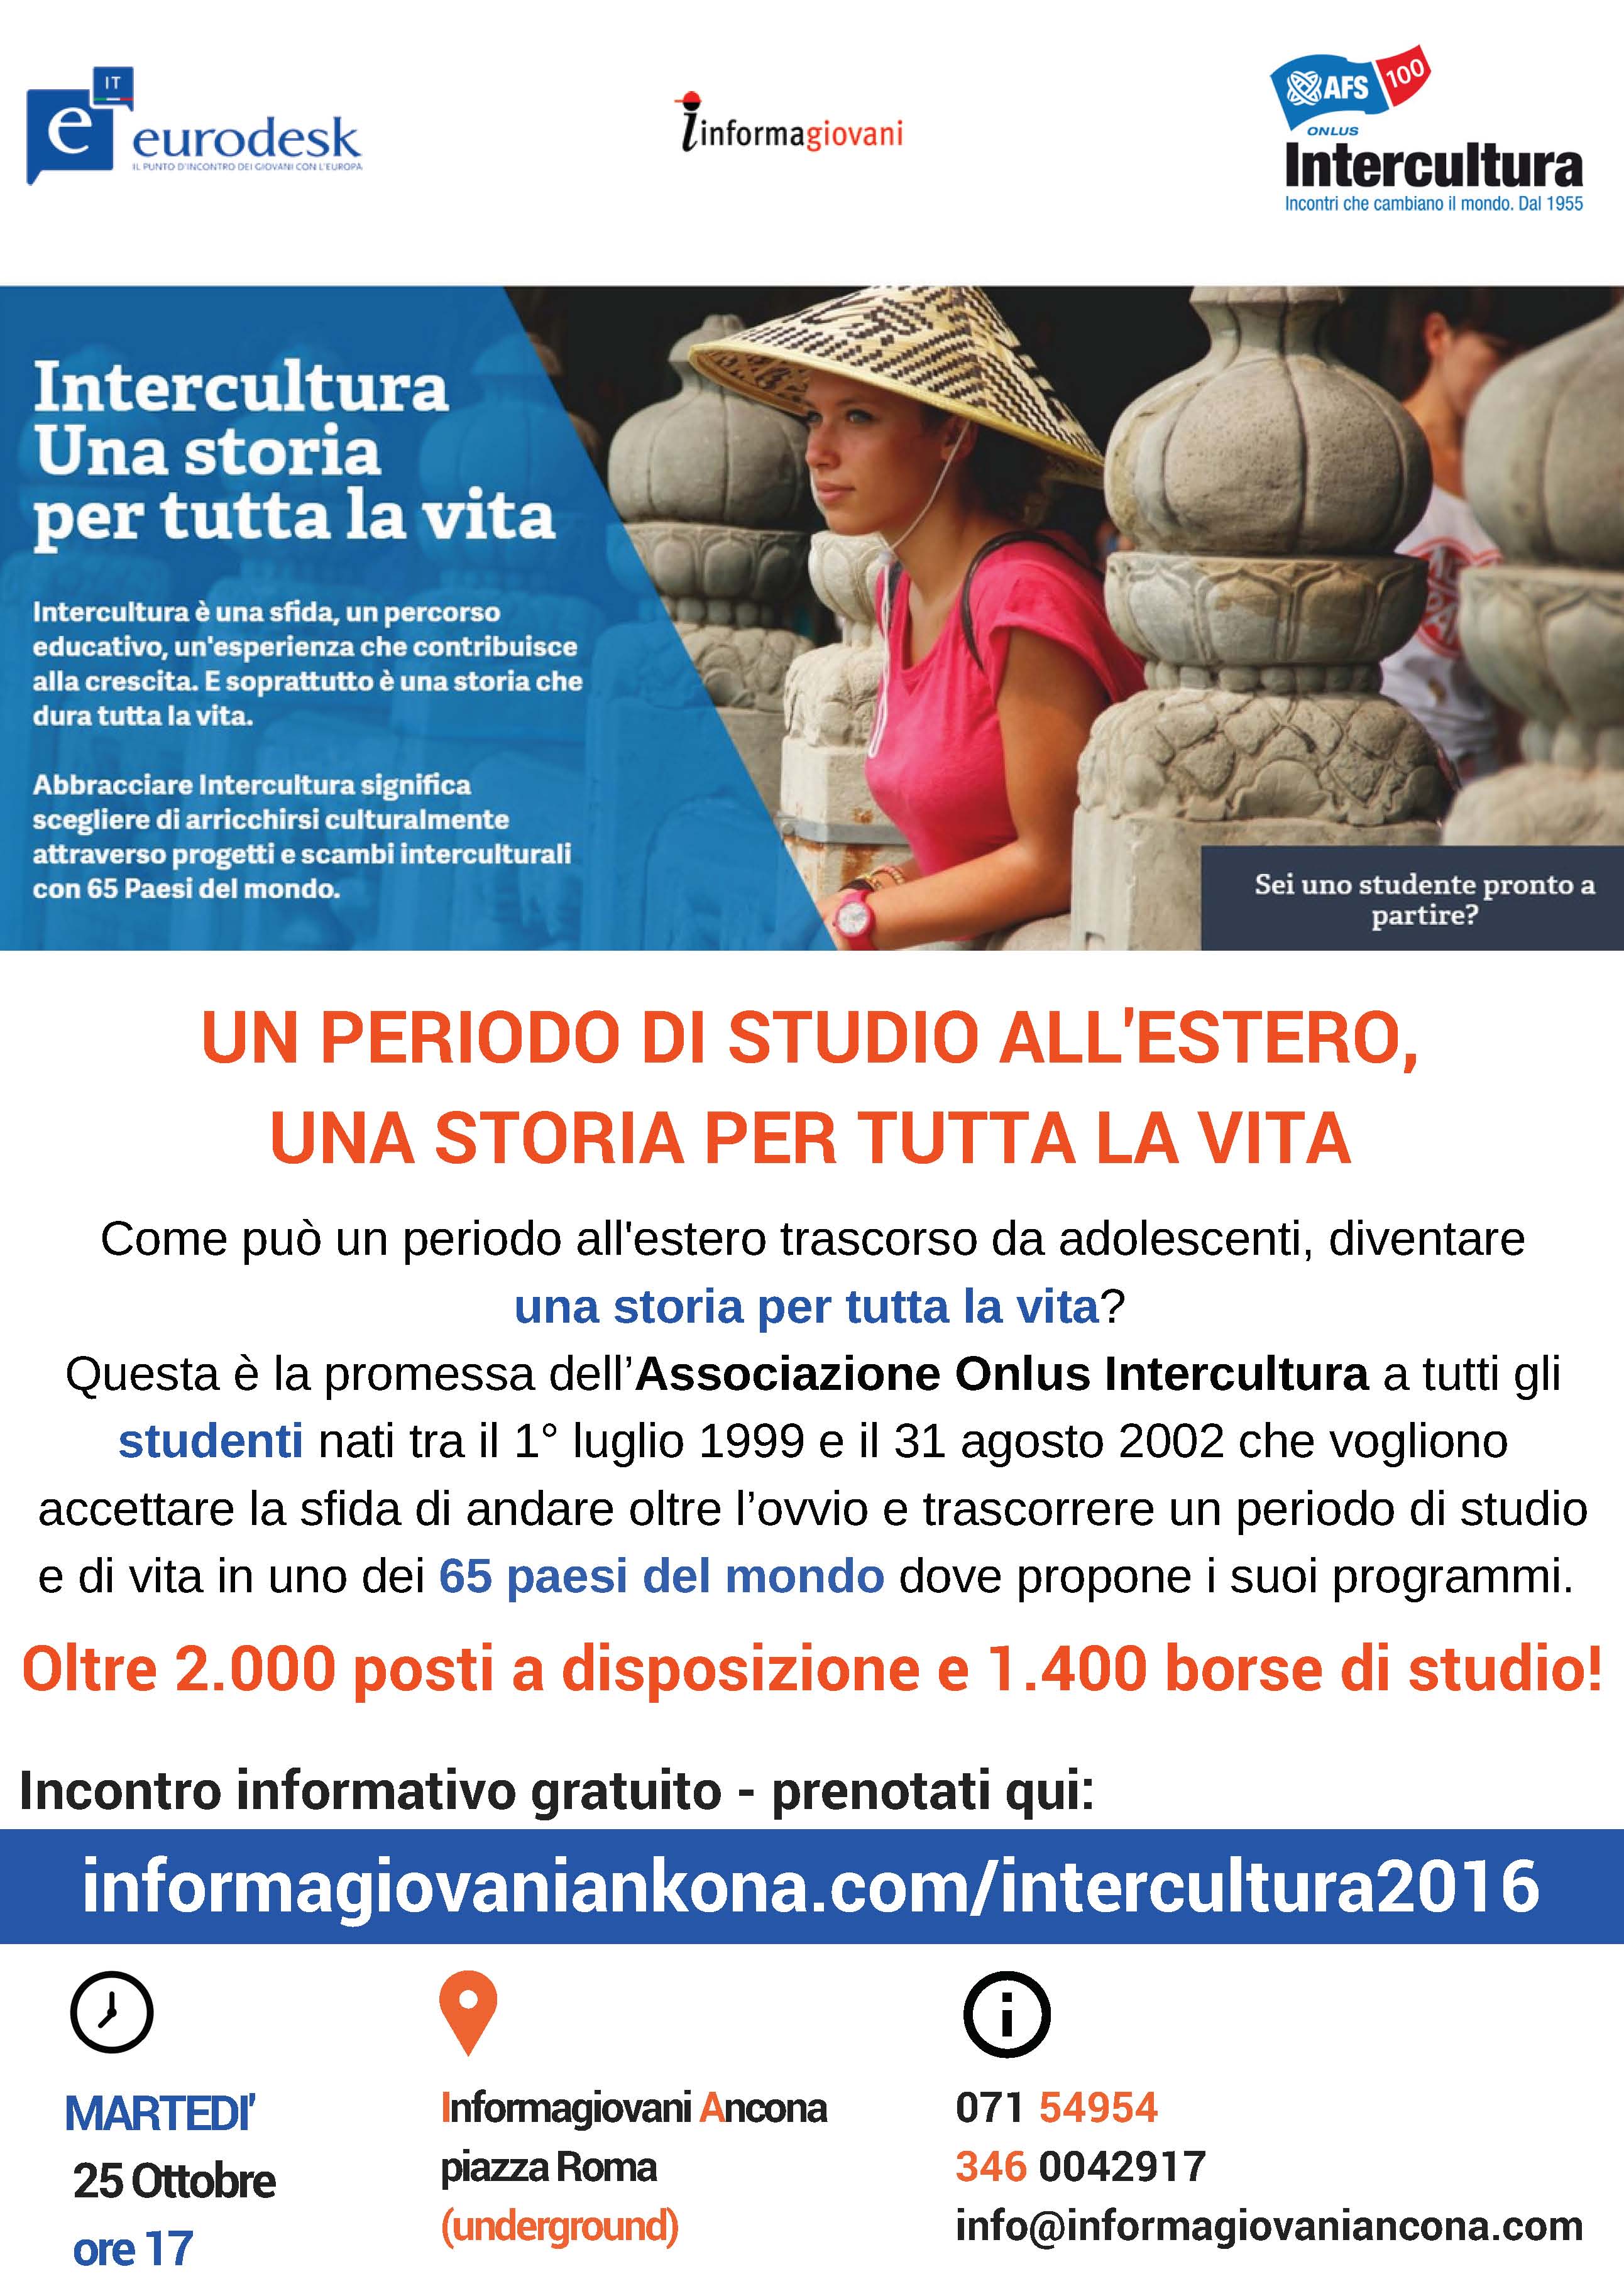 intercultura 2016 Ancona